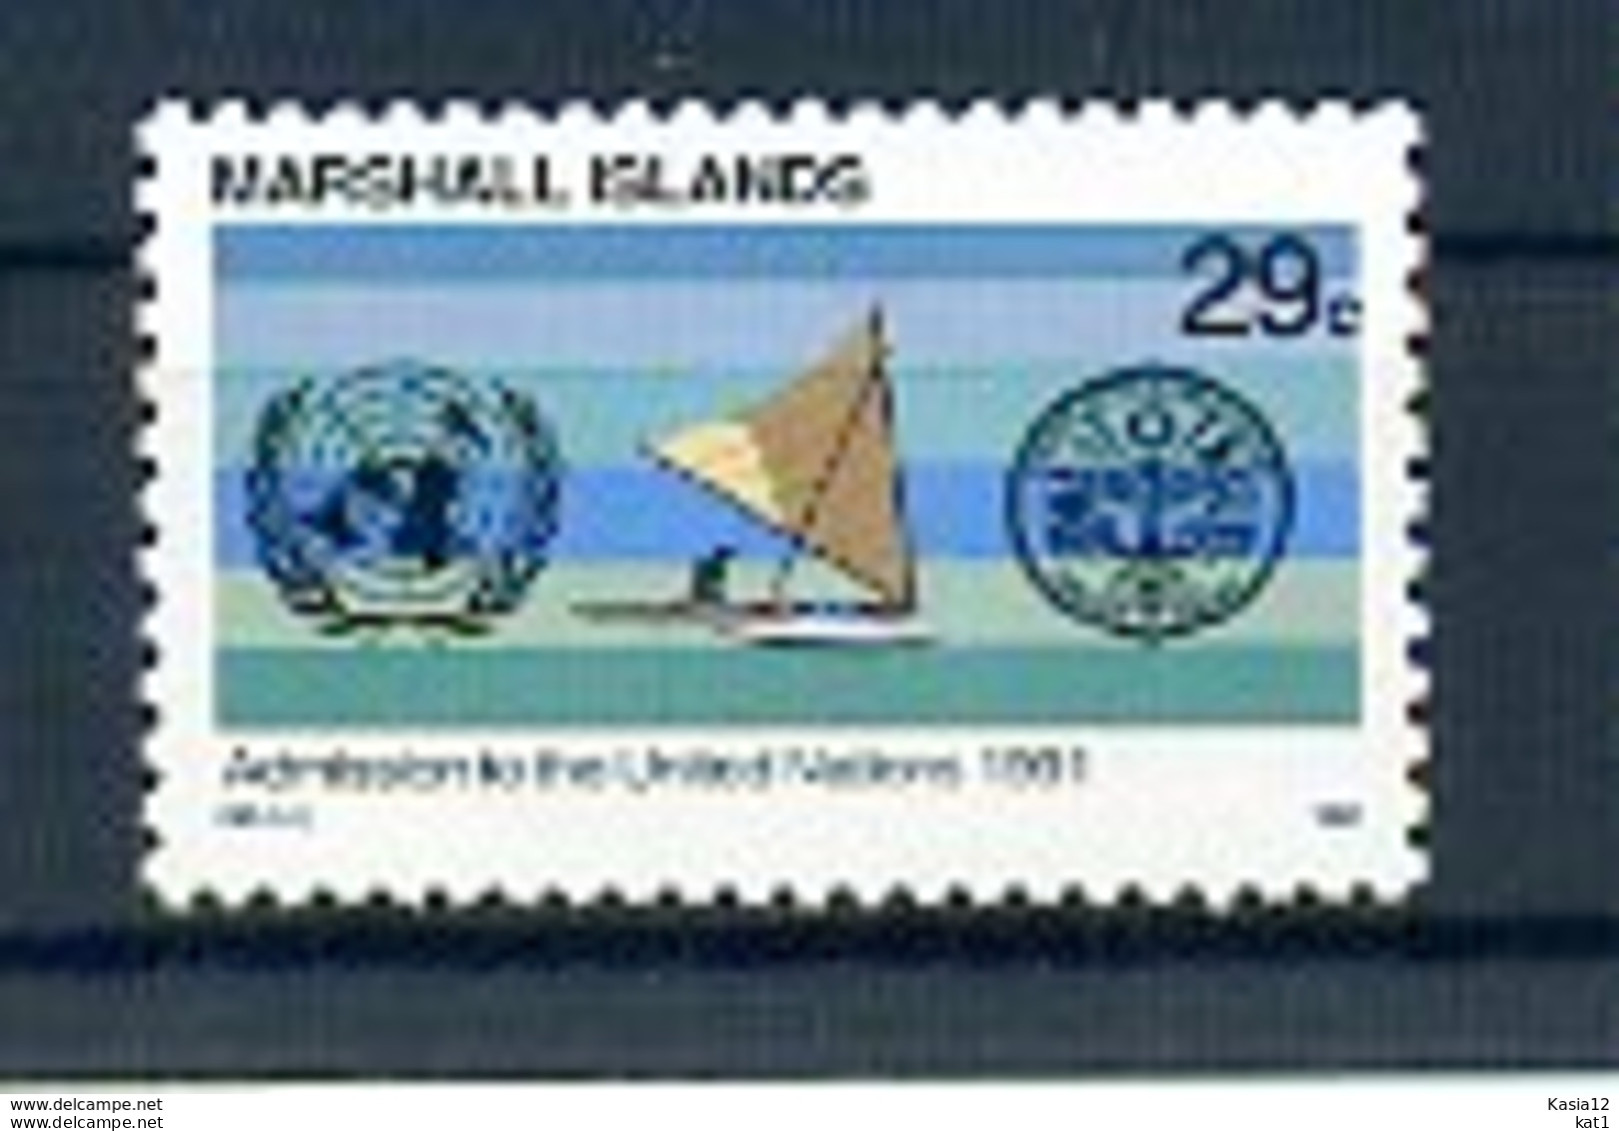 A32314)Marshallinseln 376** - Marshall